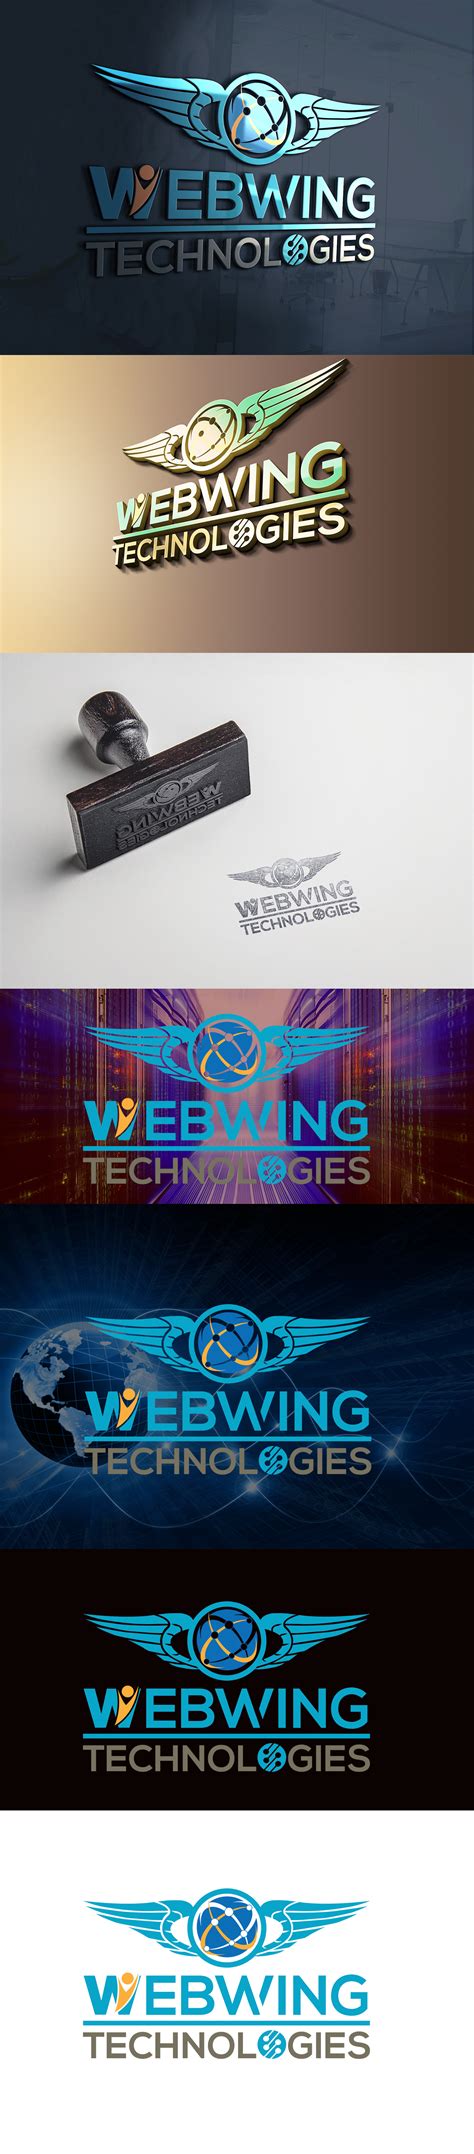 Technology Logo On Behance